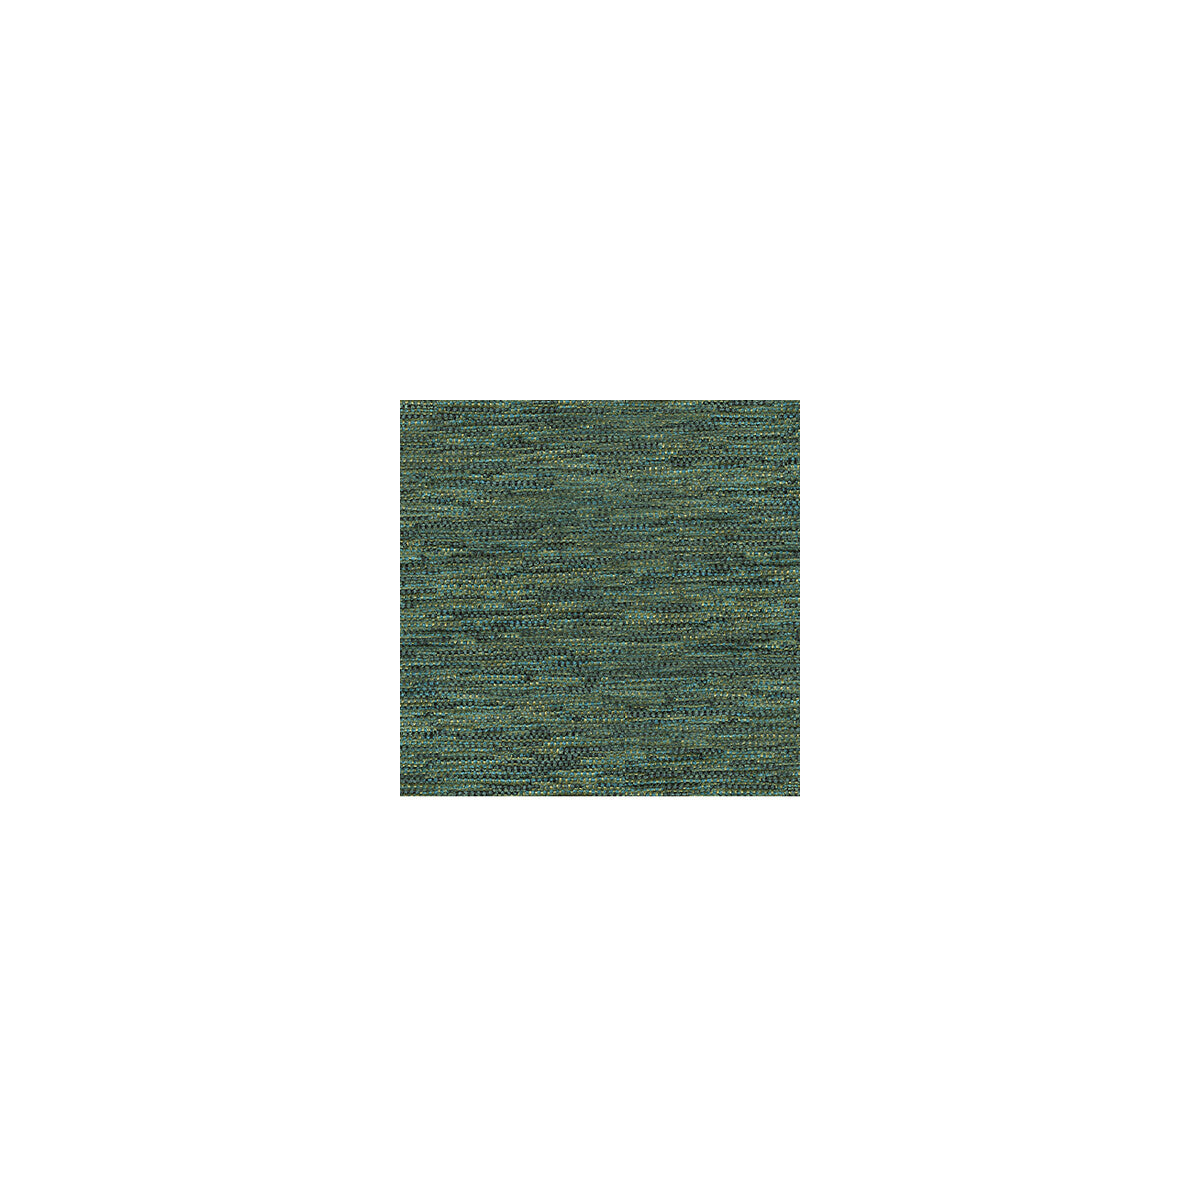 Dune Wood fabric in pool color - pattern 30136.5.0 - by Kravet Smart